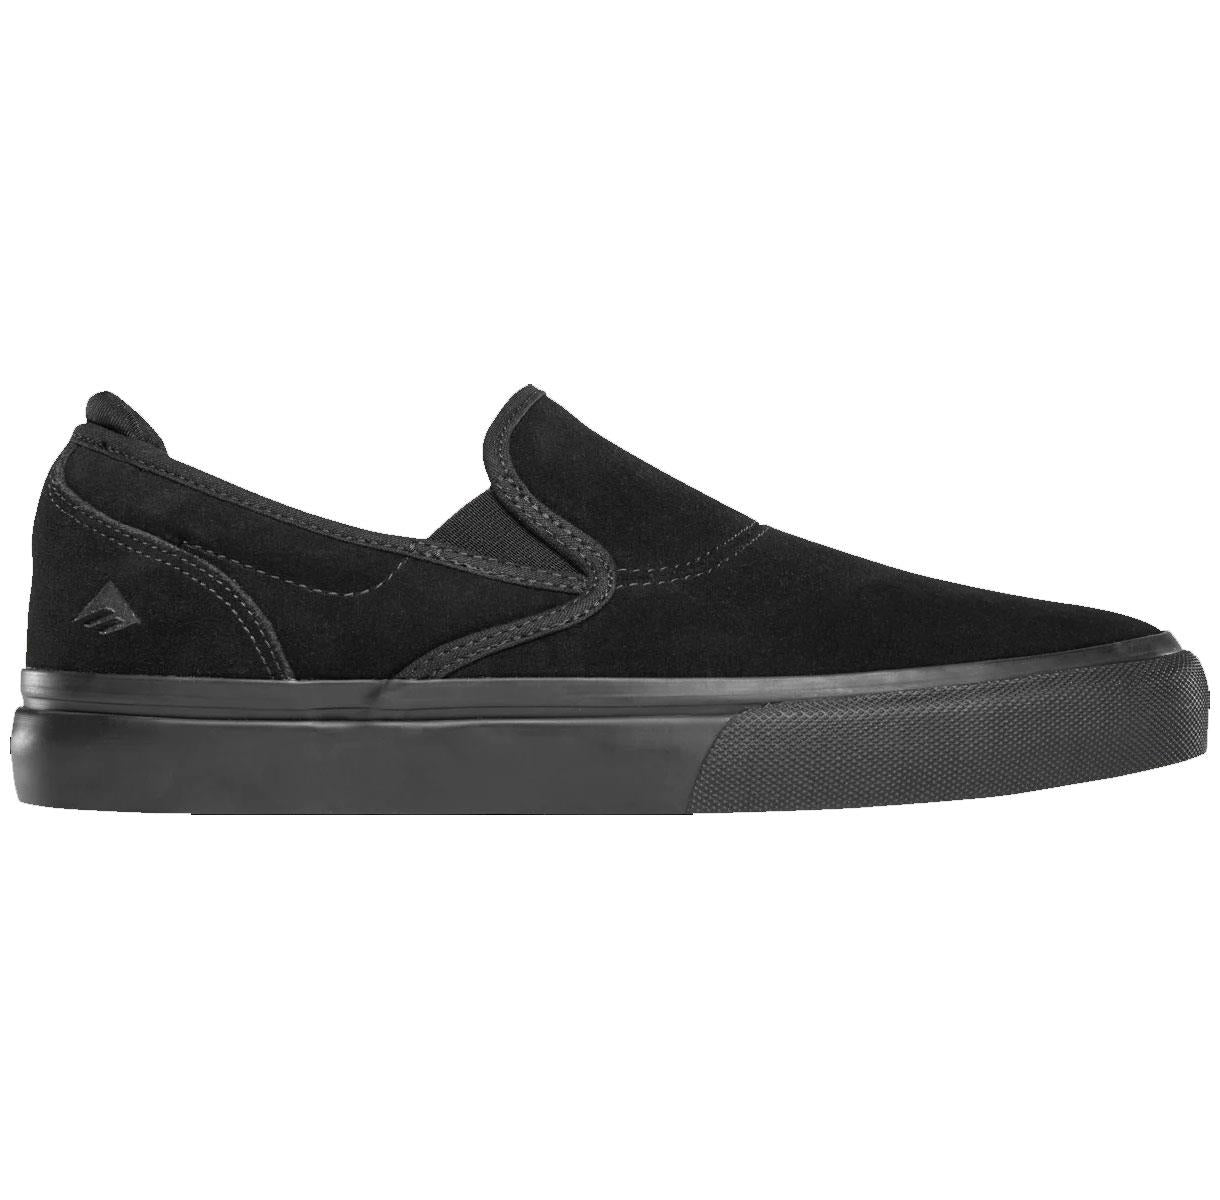 Emerica Wino G6 Slip On Skate Shoes Black